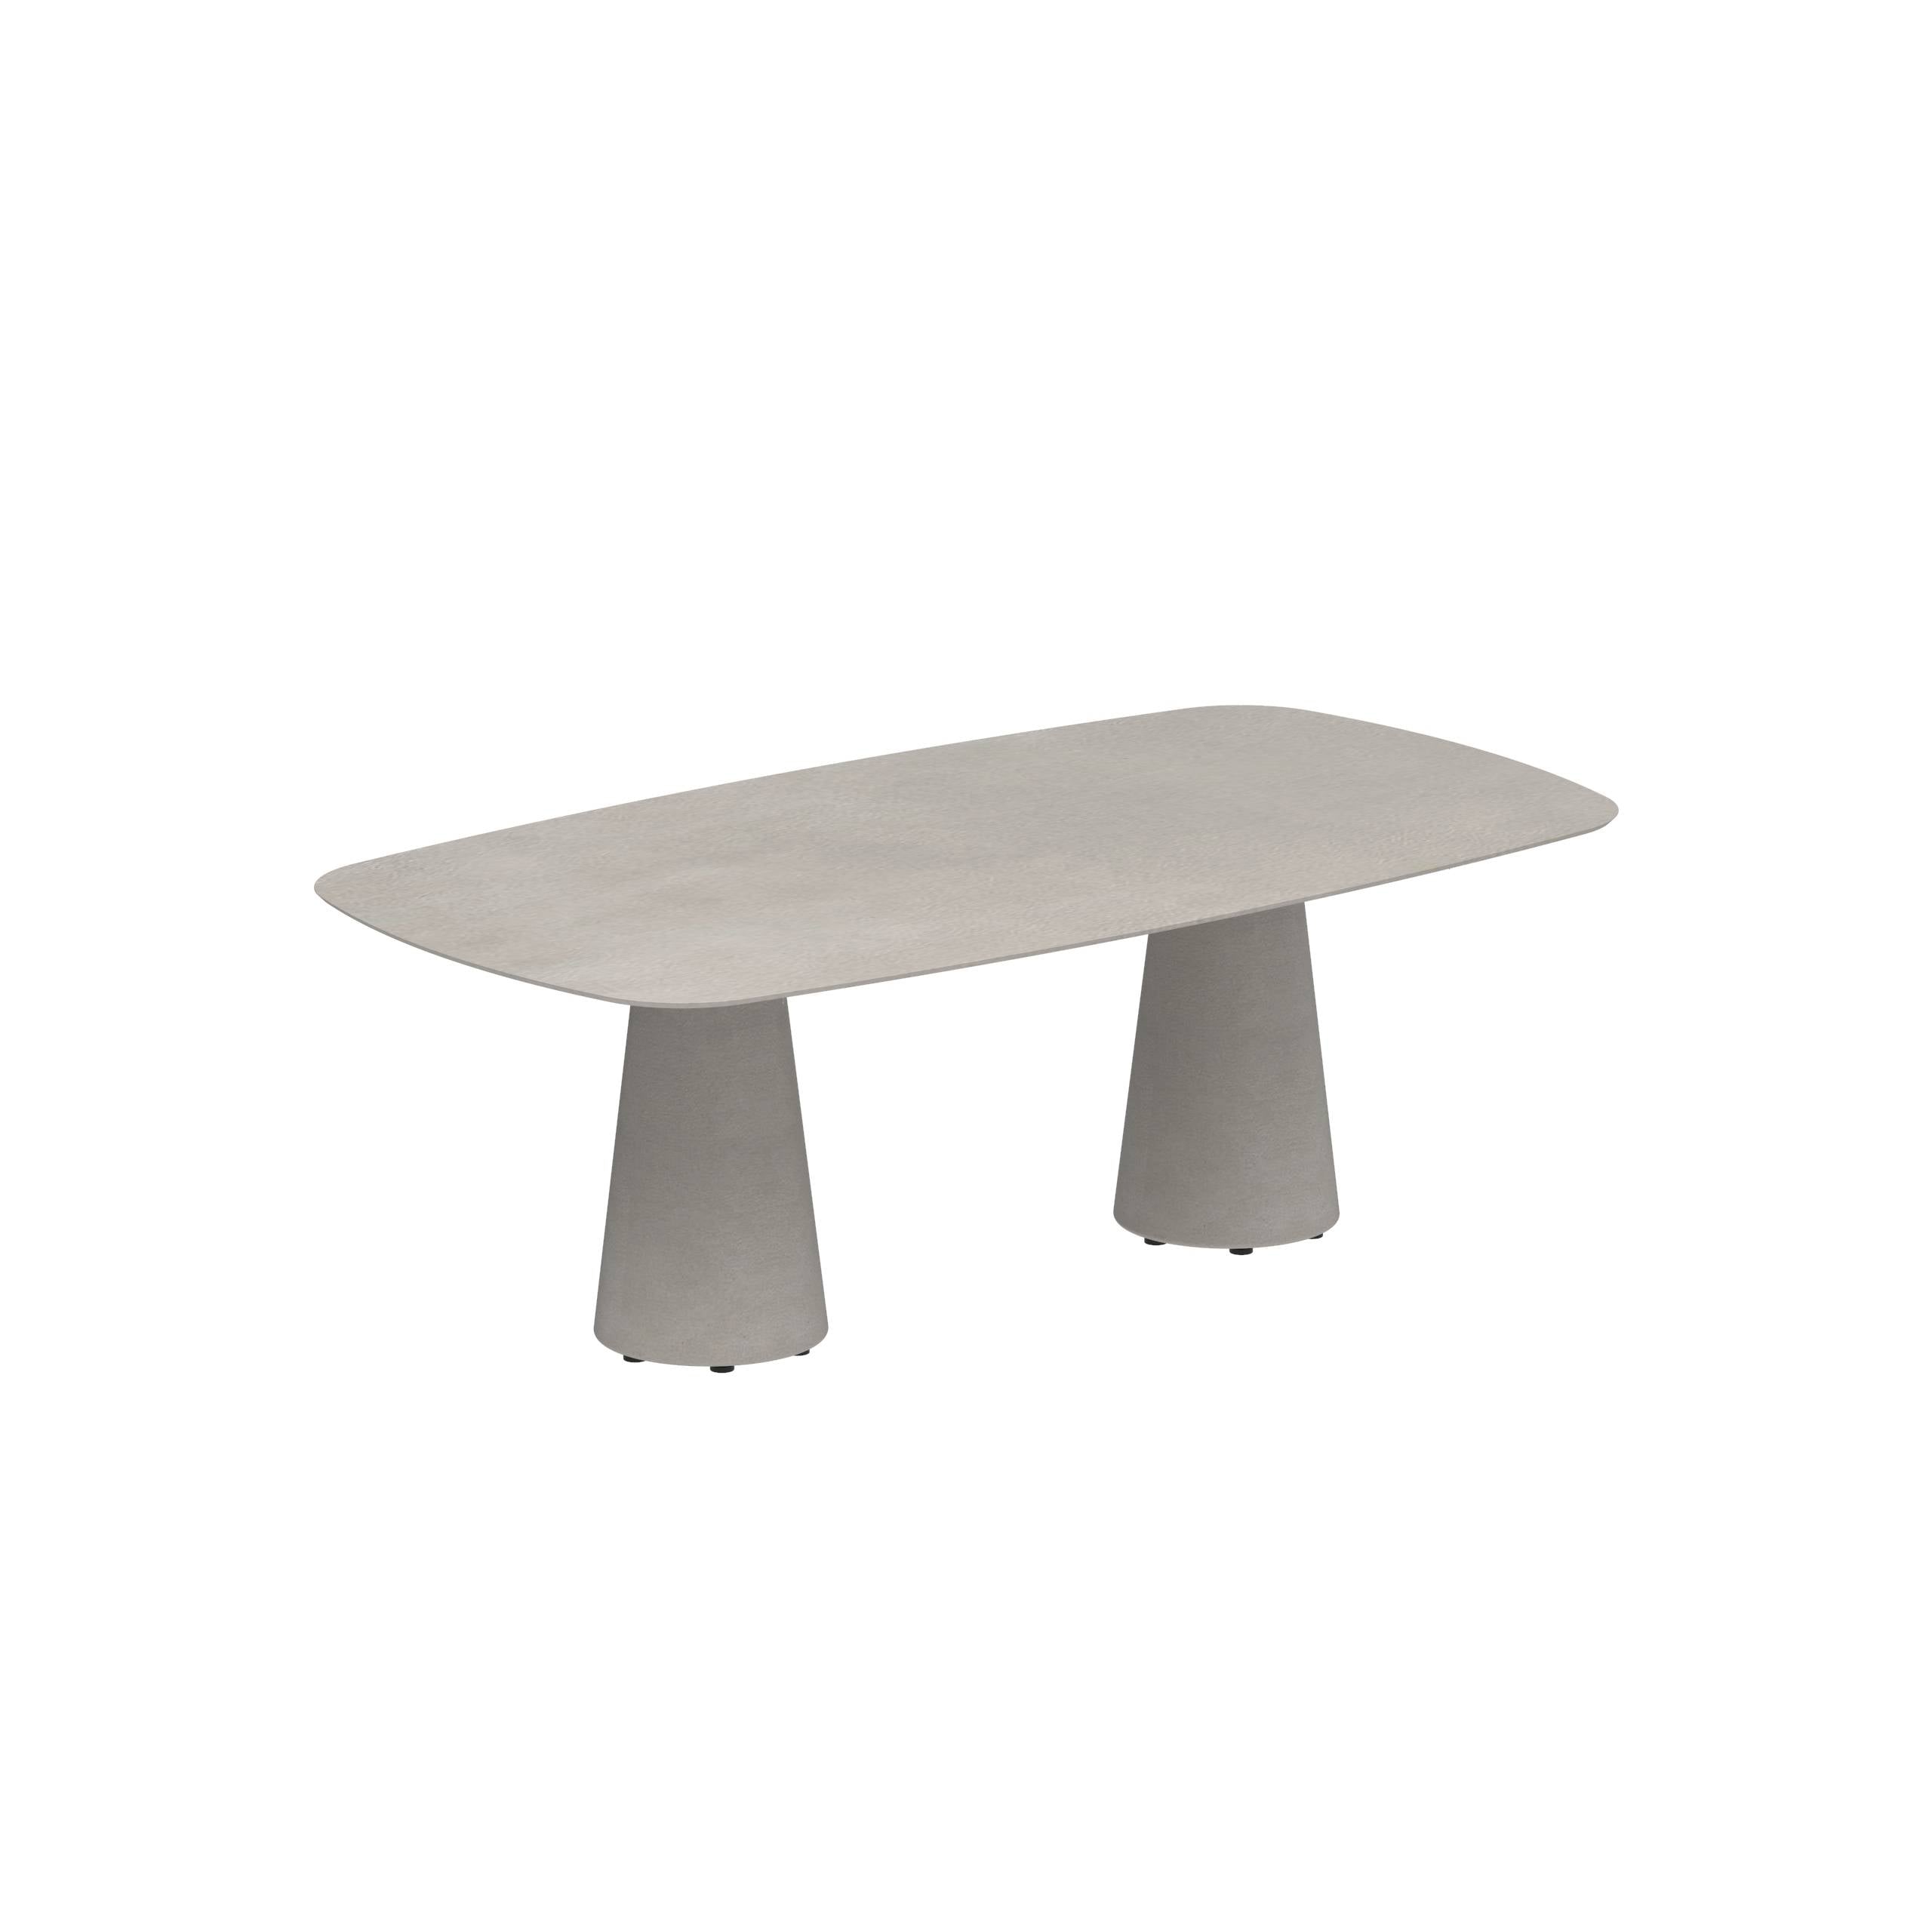 Conix Table 220x120 Cm Legs Concrete Cement Grey - Table Top Ceramic Cemento Luminoso